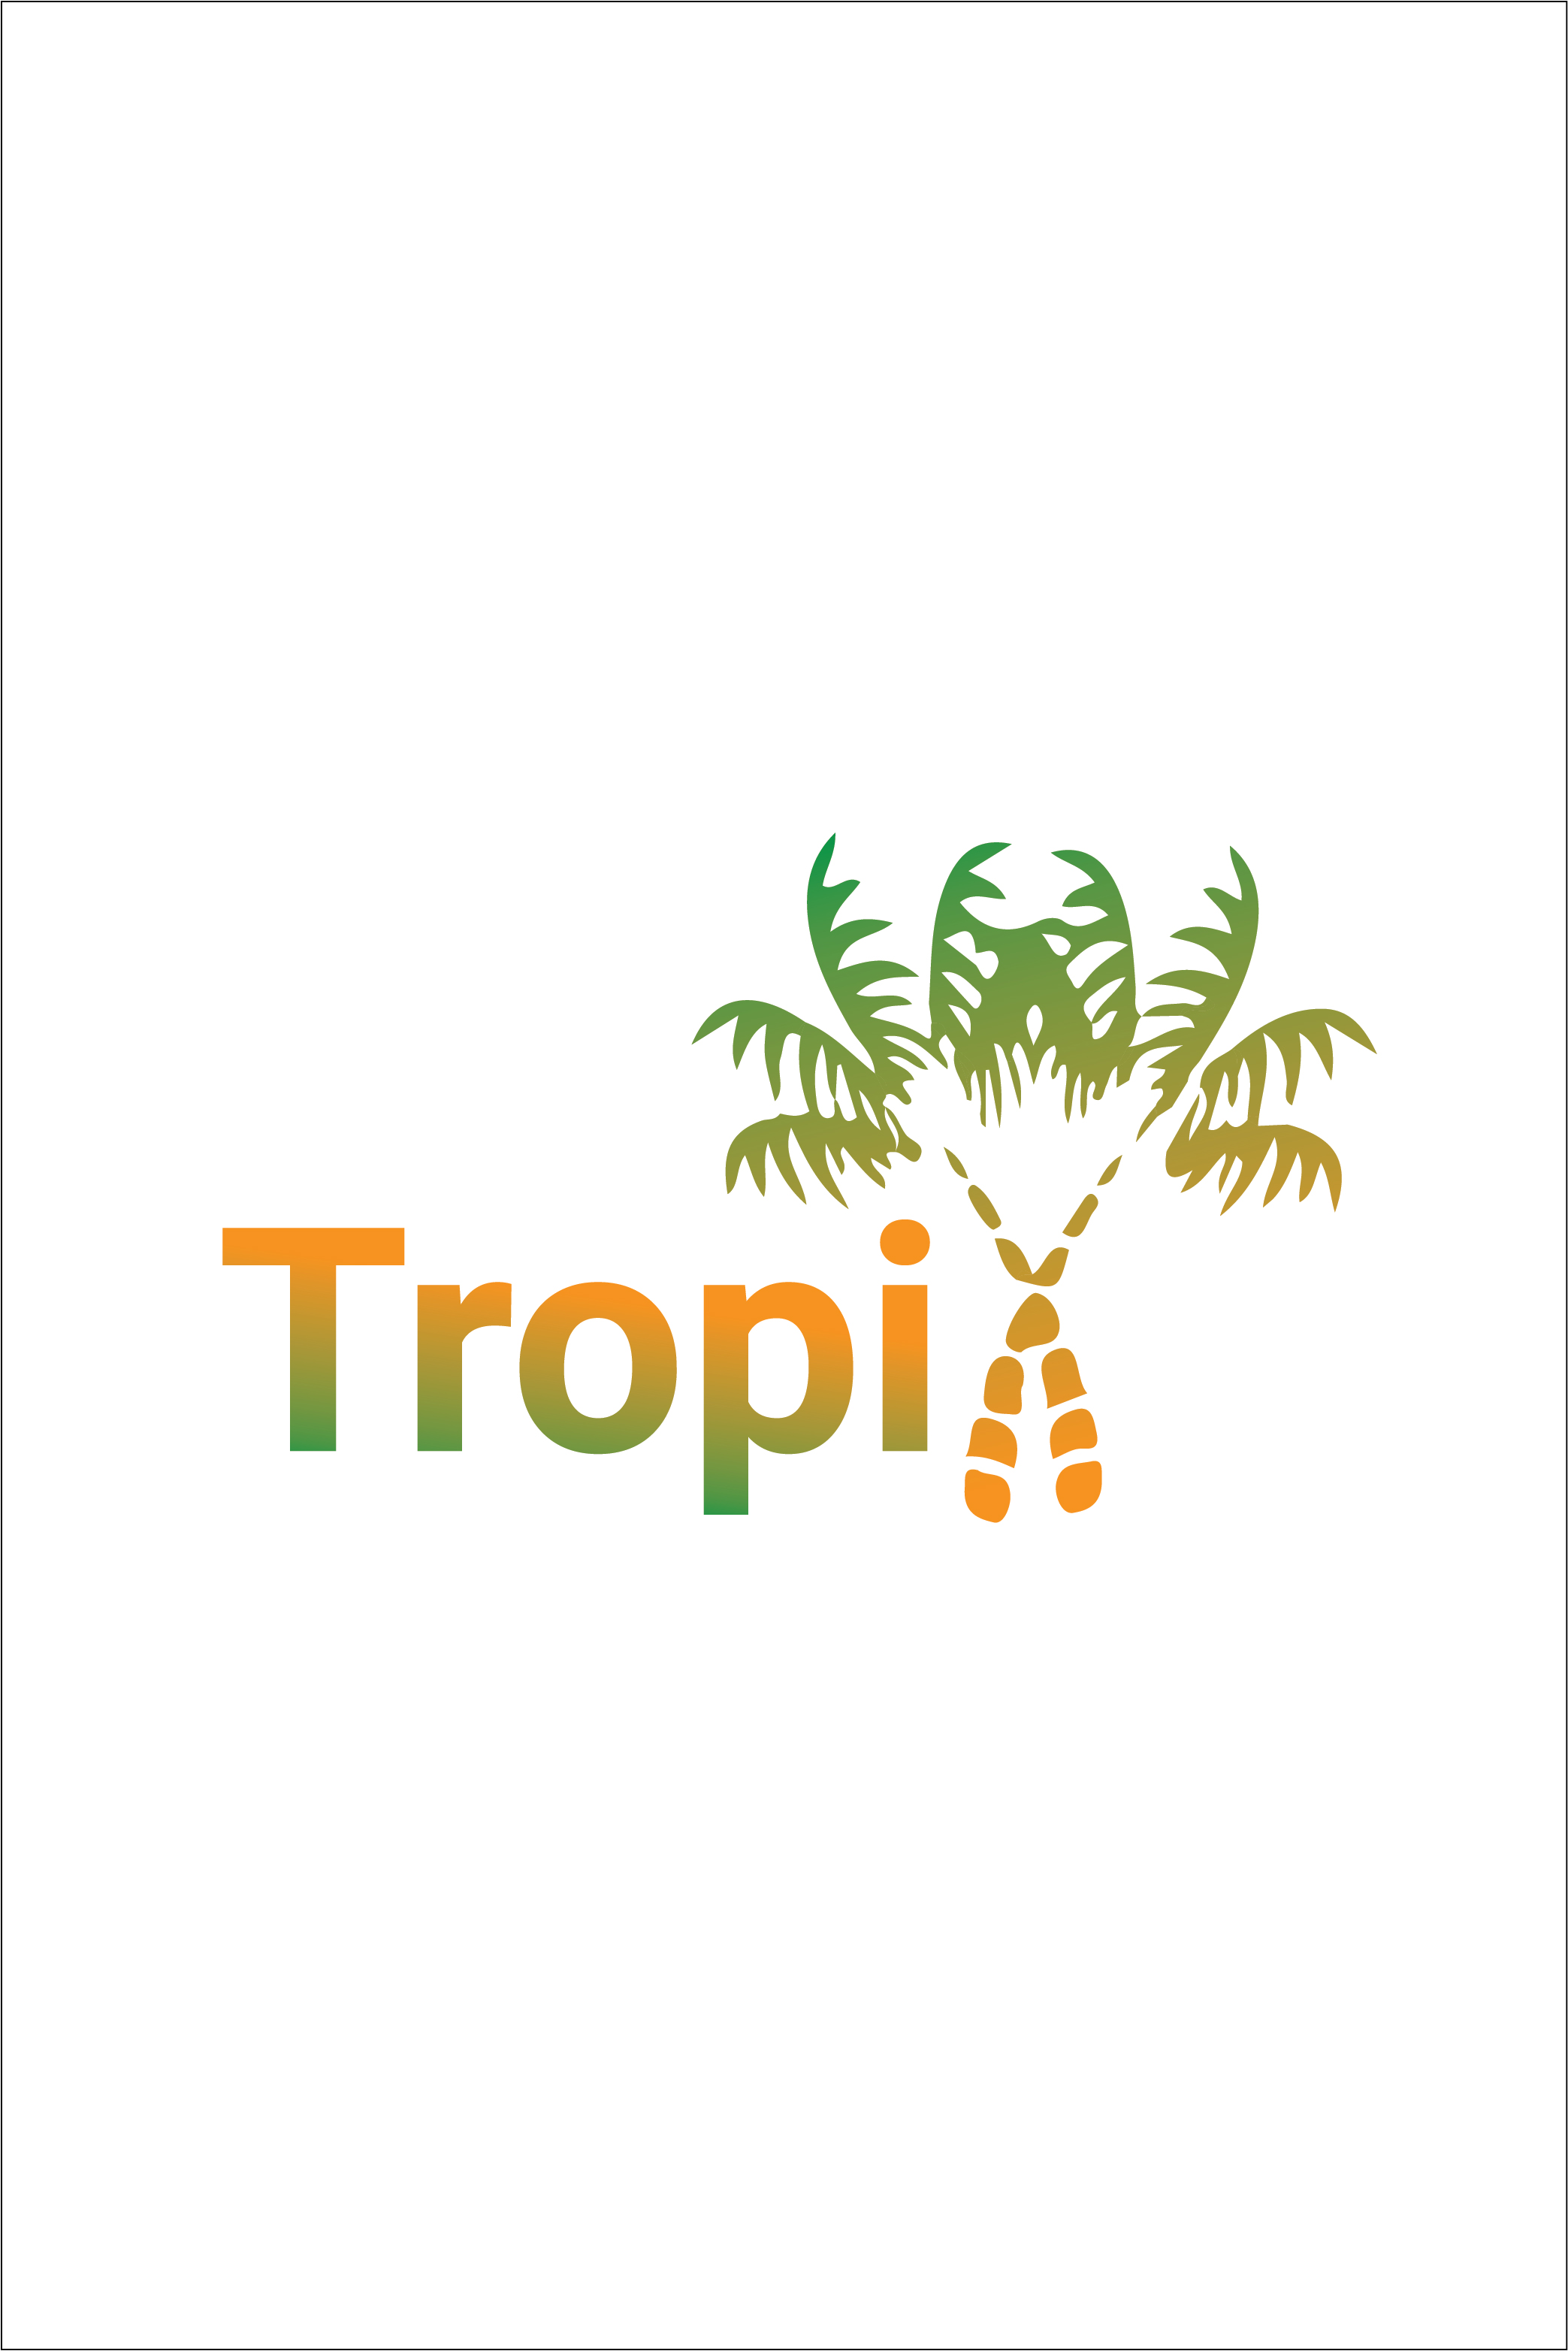 Tour & Travel Logo Design Vector Image Template pinterest preview image.